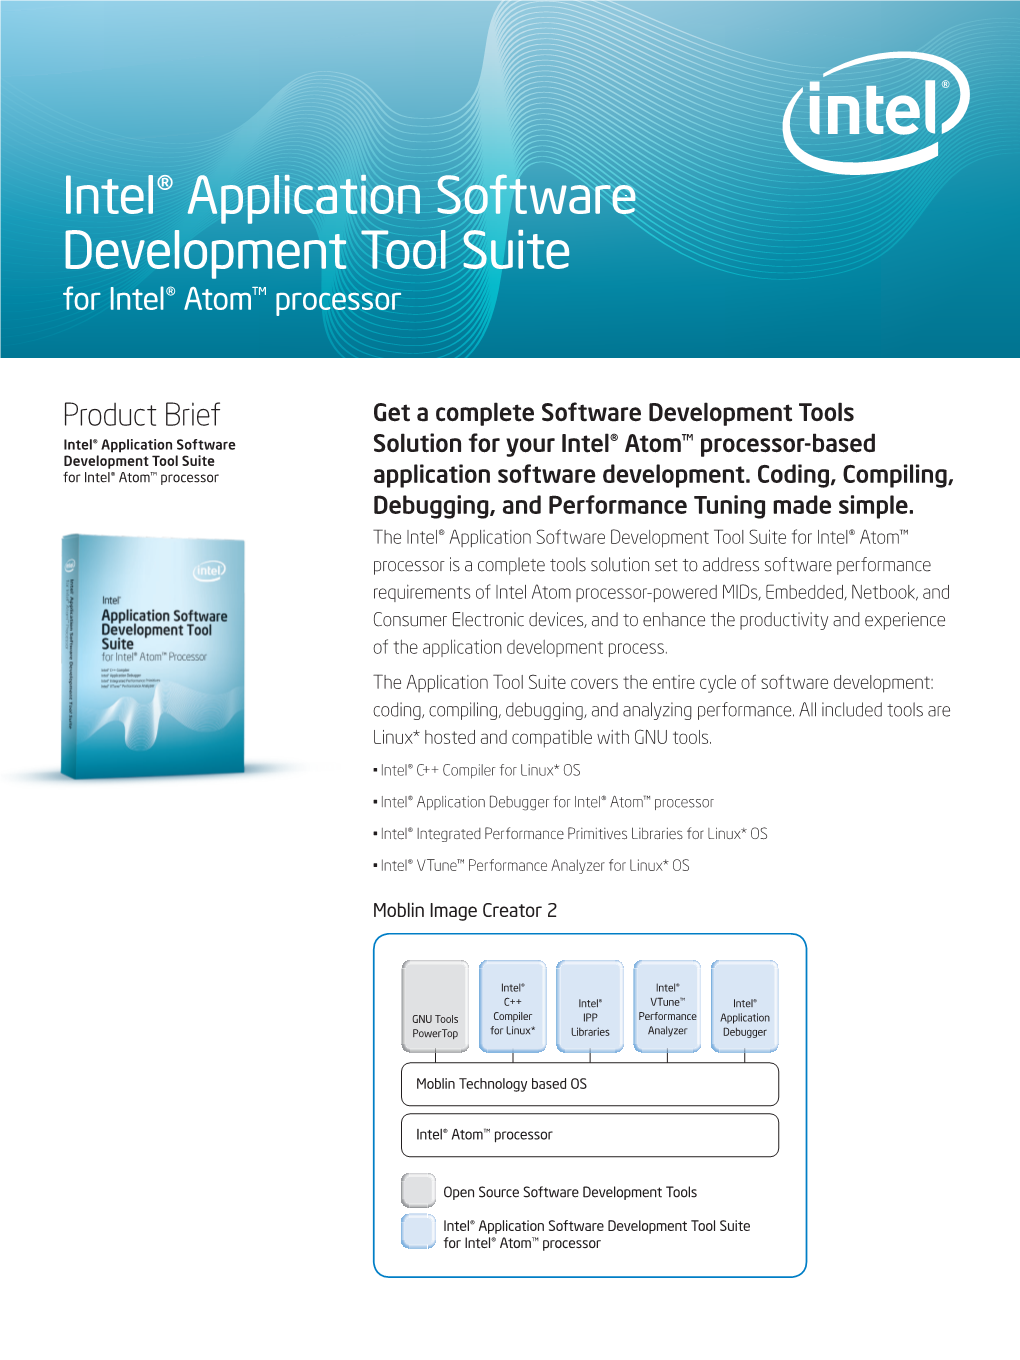 Intel® Application Software Development Tool Suite for Intel® Atom™ Processor